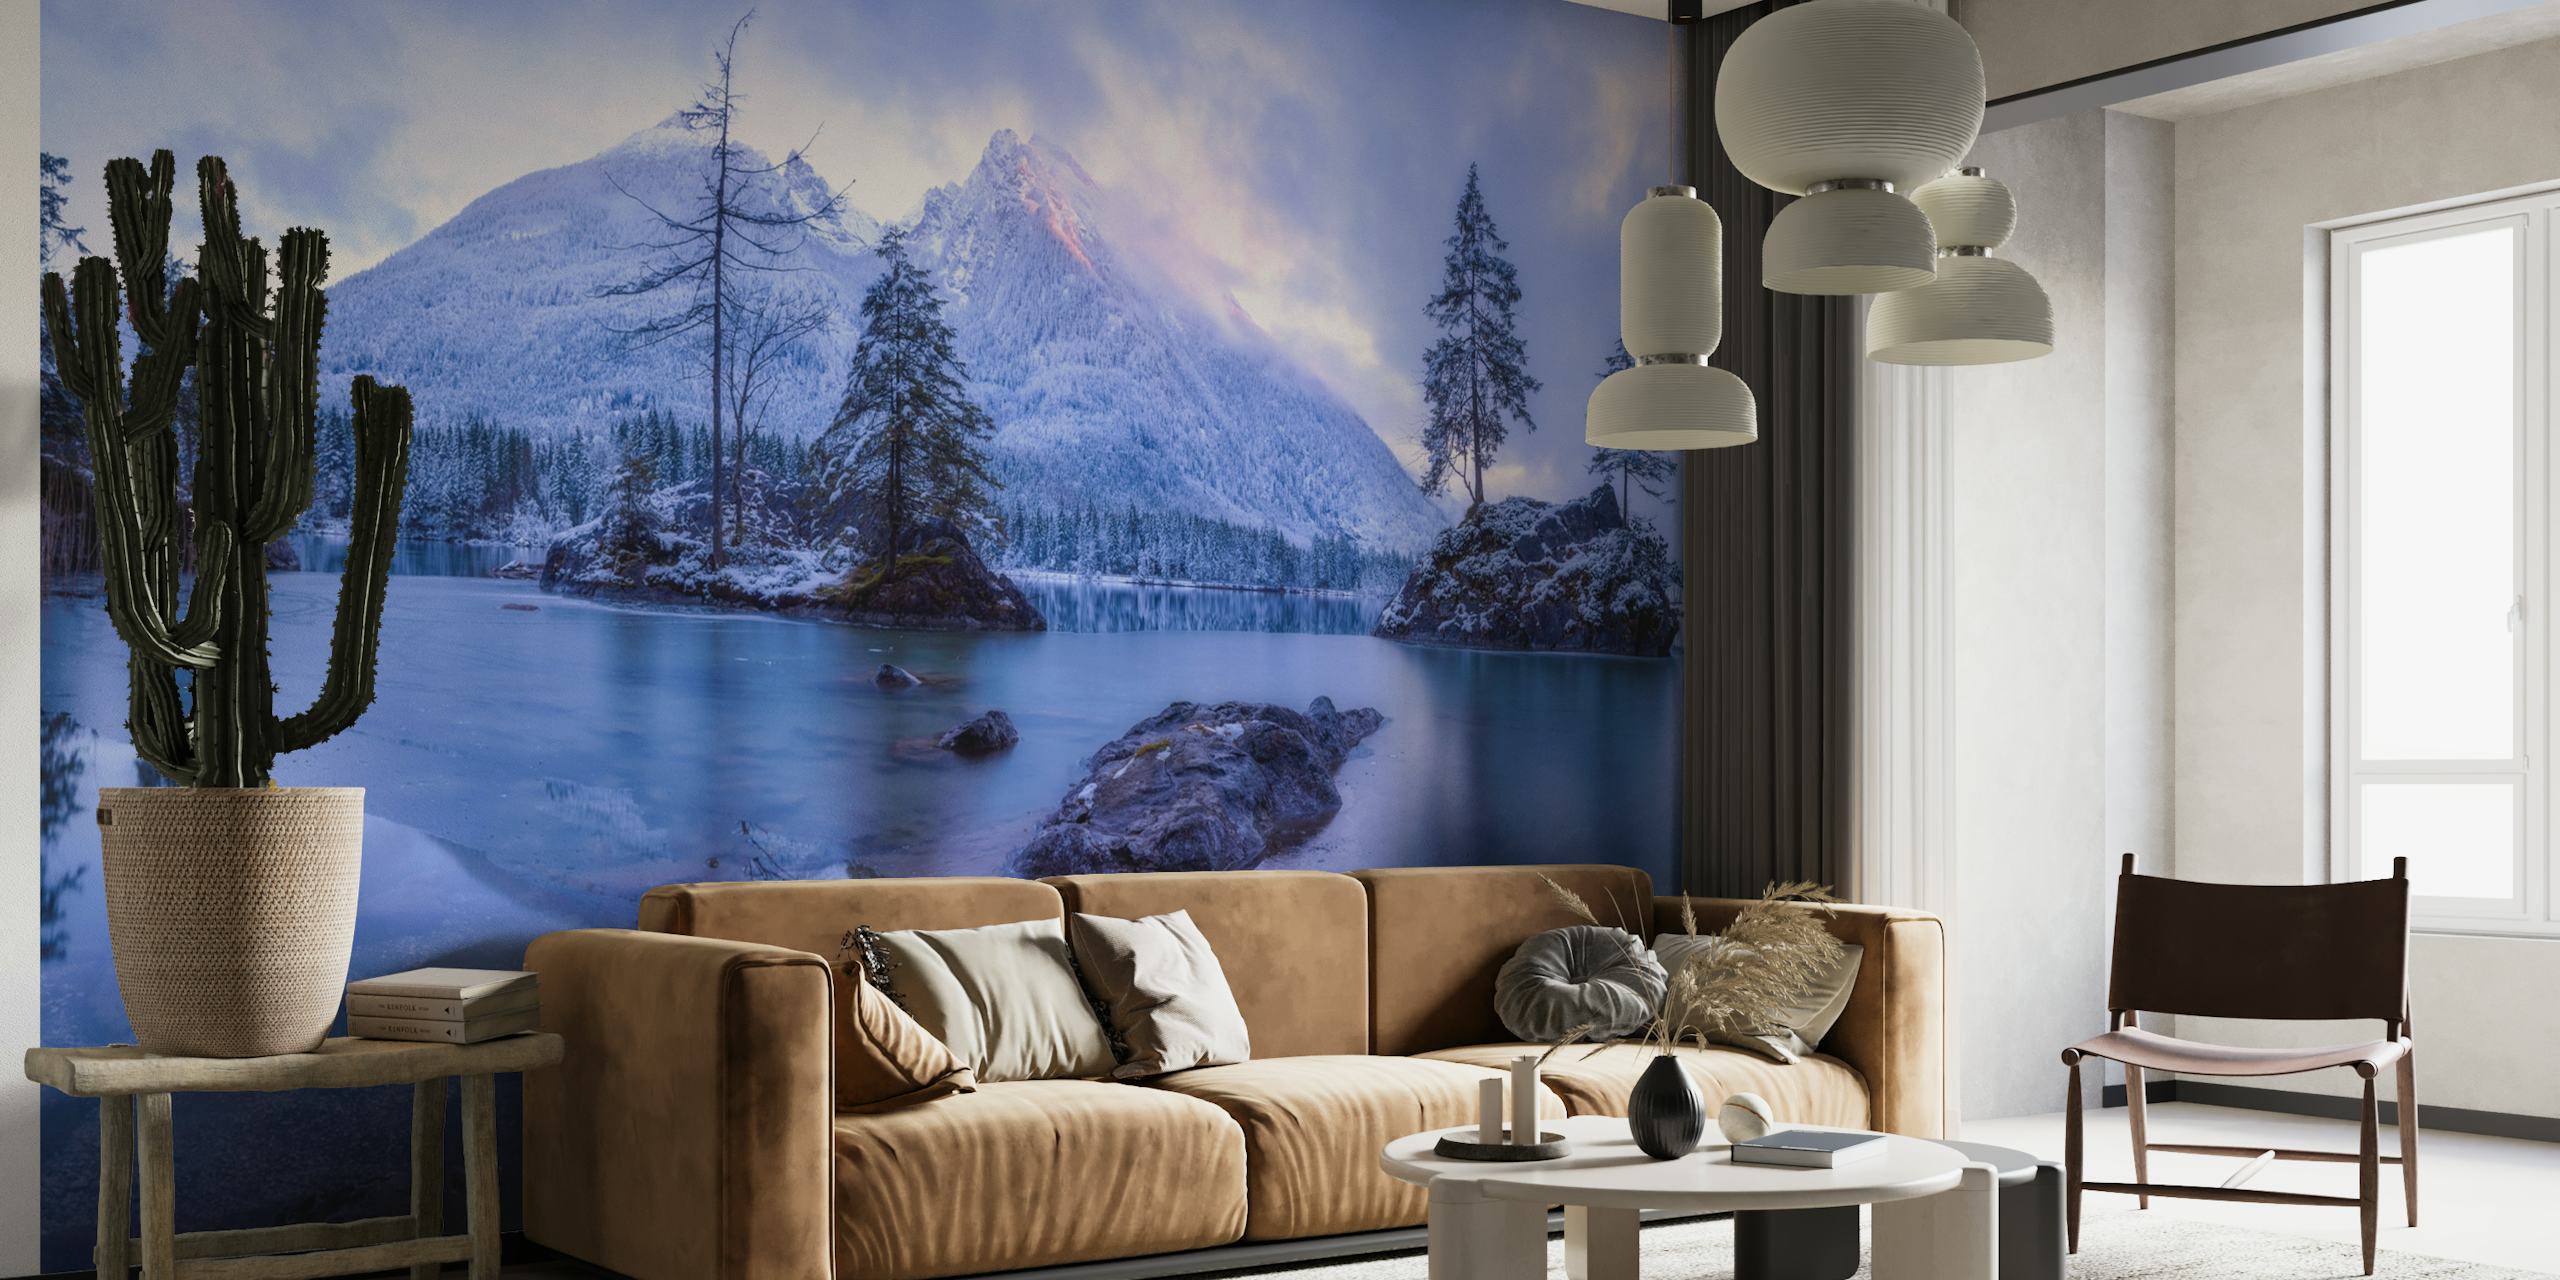 The Frozen Mountain wallpaper